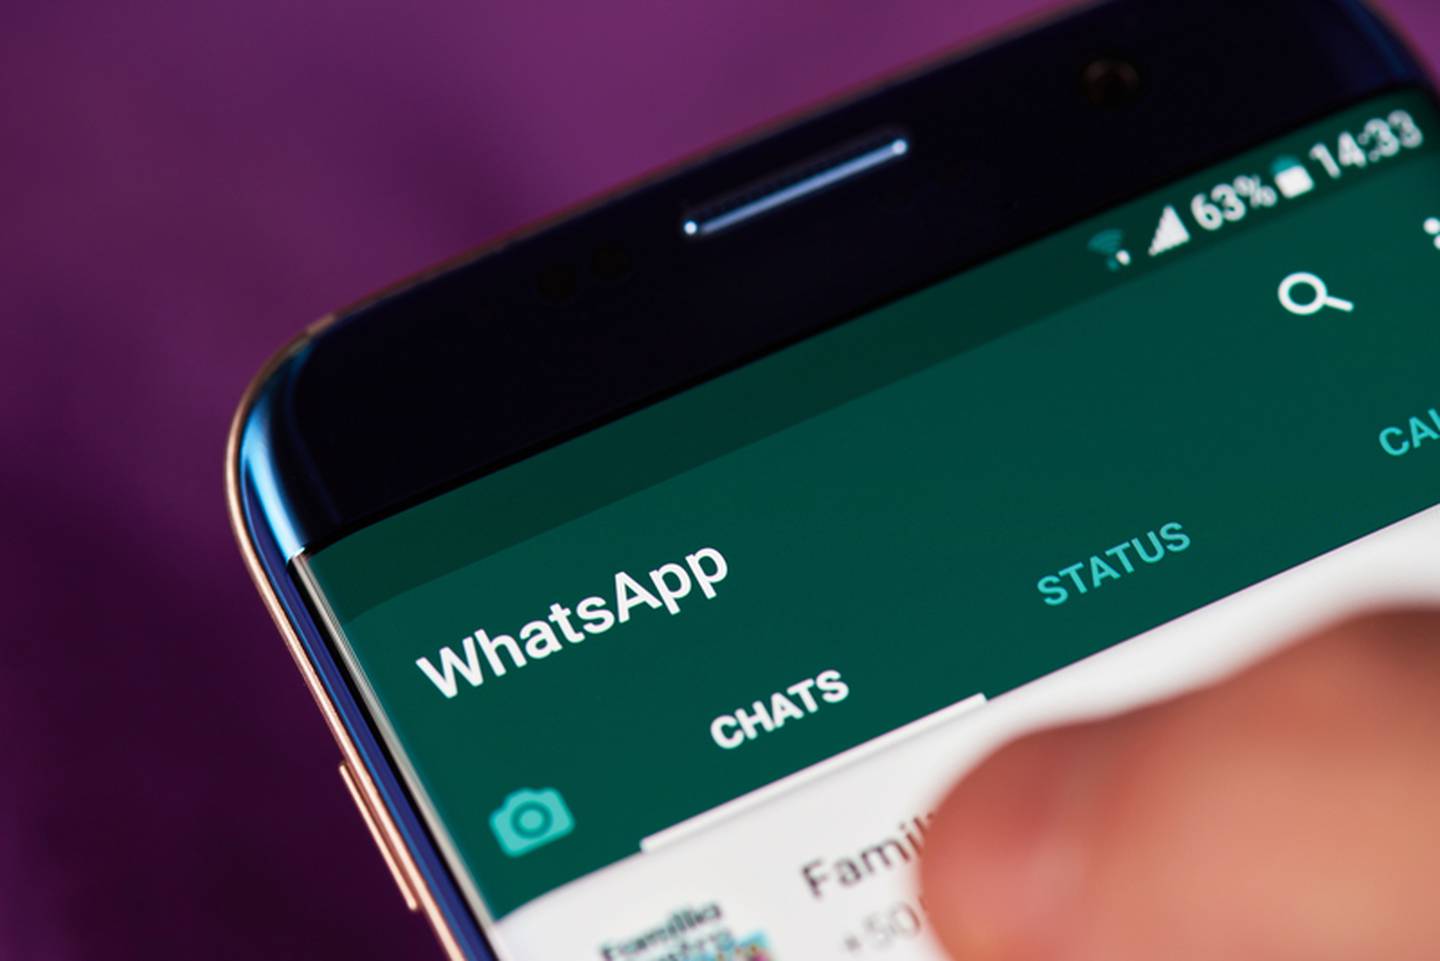 whatsapp-chat-screen